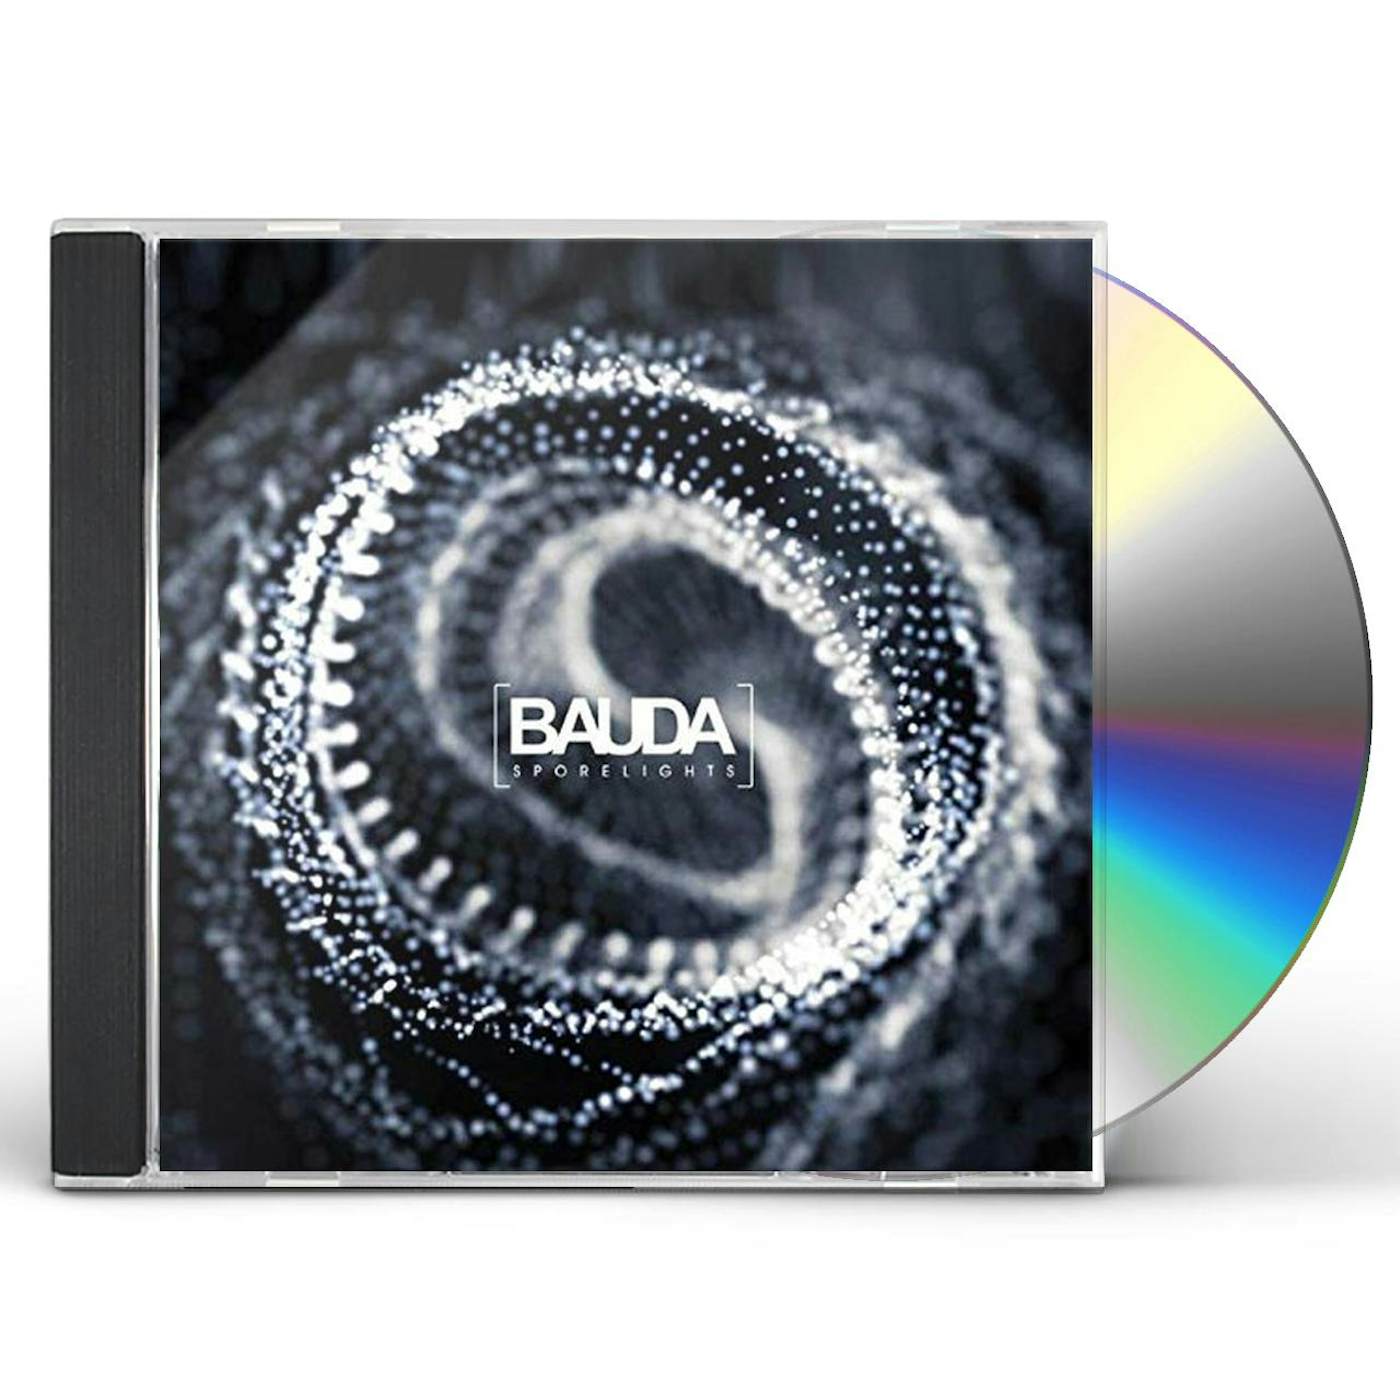 Bauda SPORELIGHTS CD